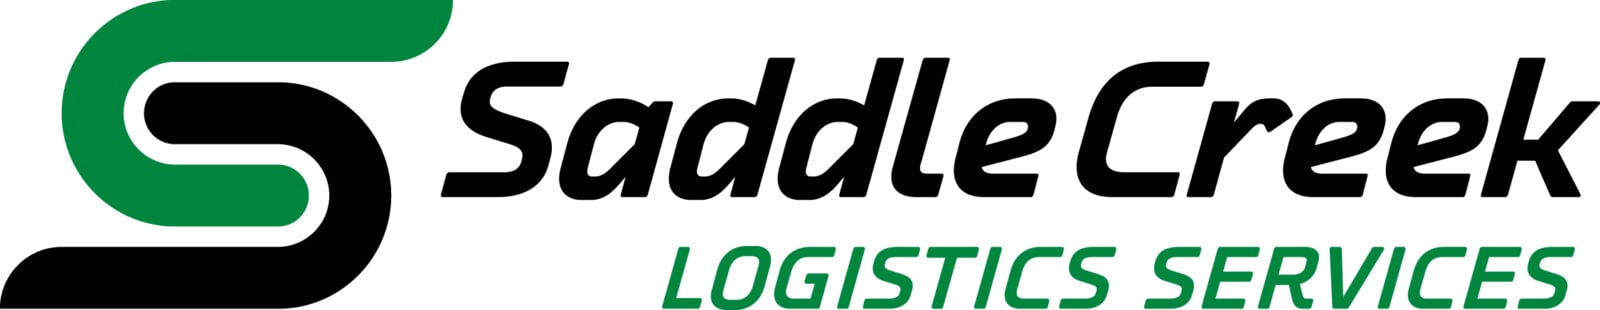 SaddleCreek Logistics Logo